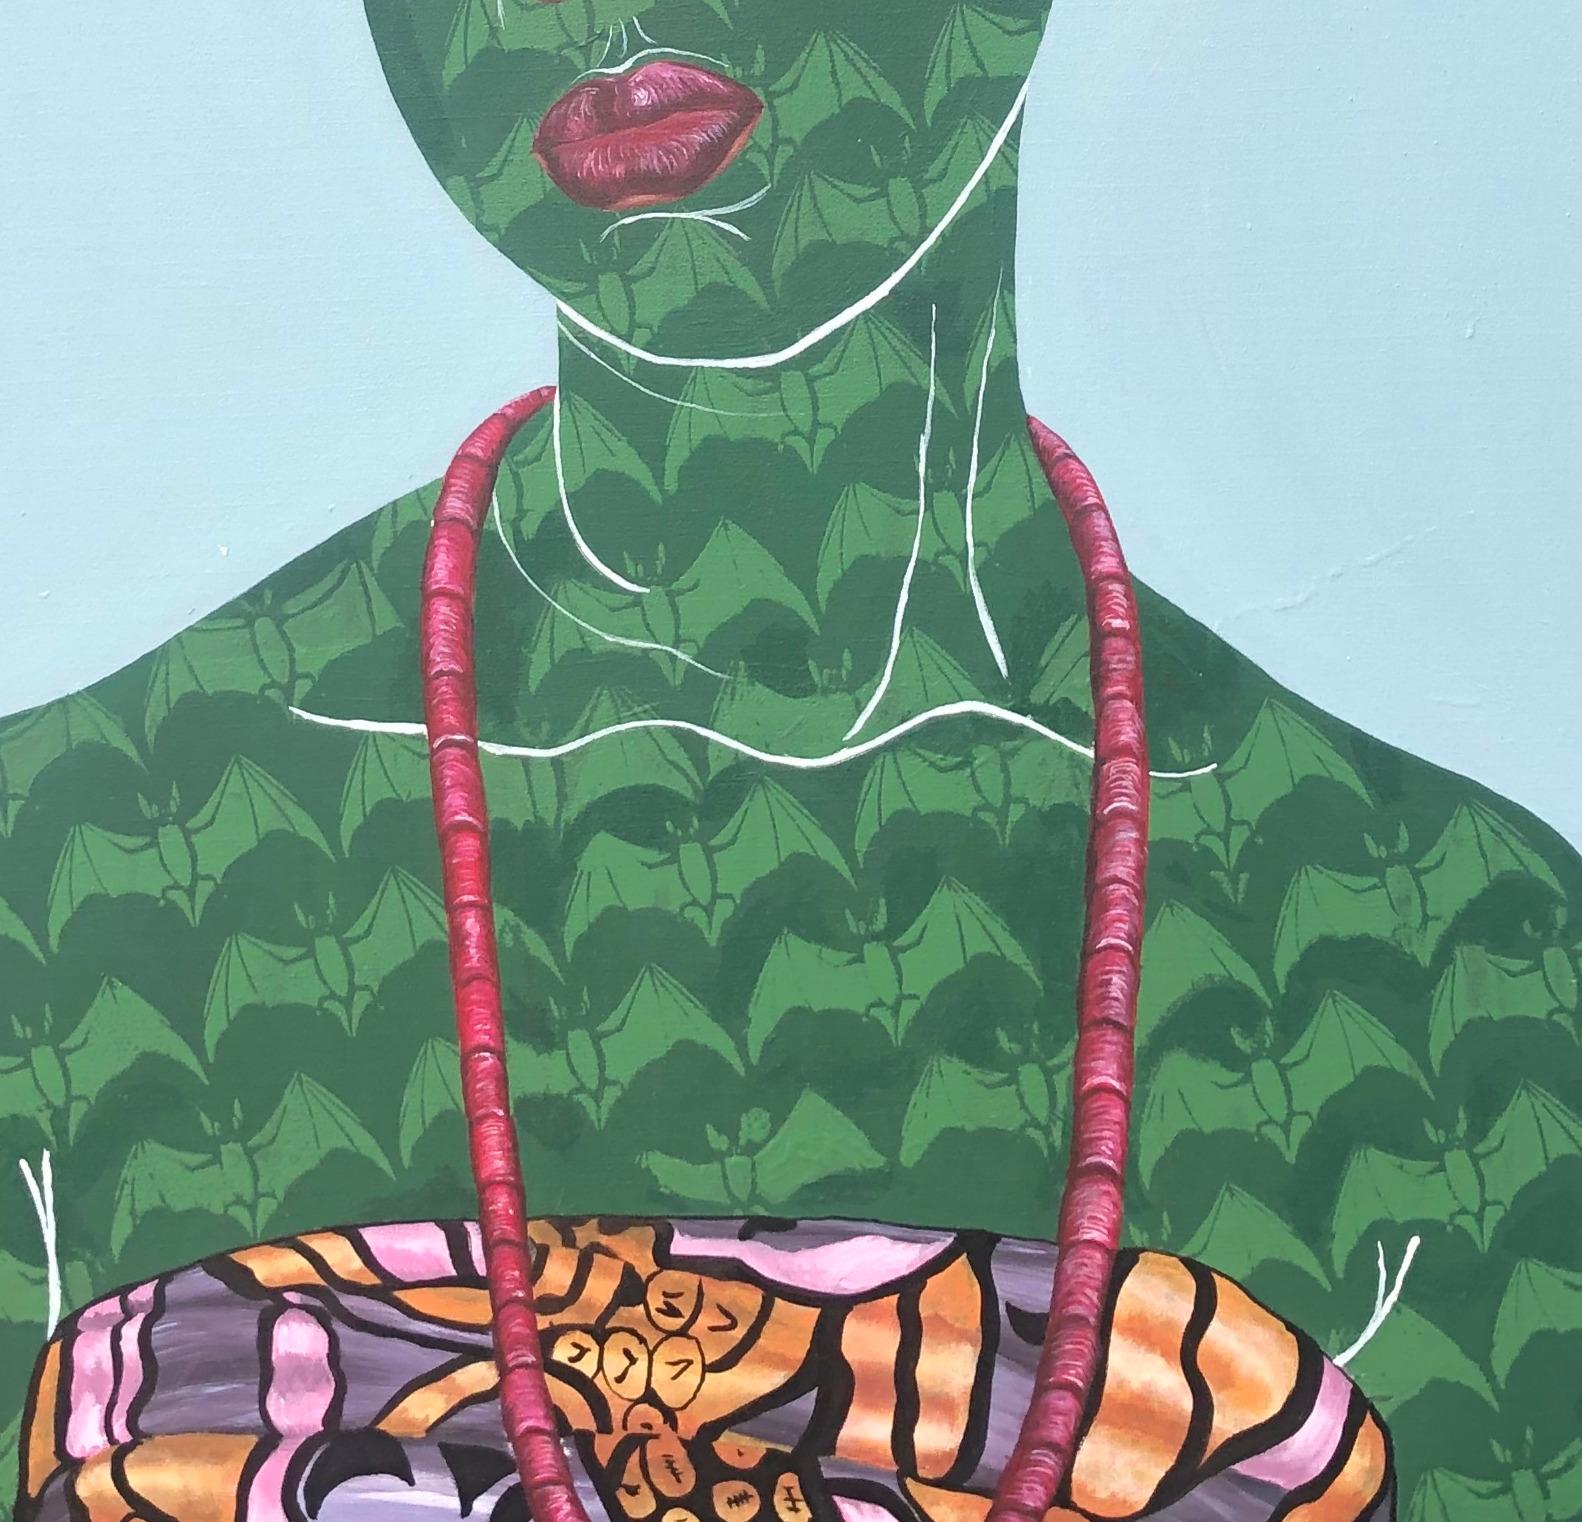 GÈLÈ 1 (Kopf Krawatte) (Pop-Art), Painting, von Oluwafemi Afolabi